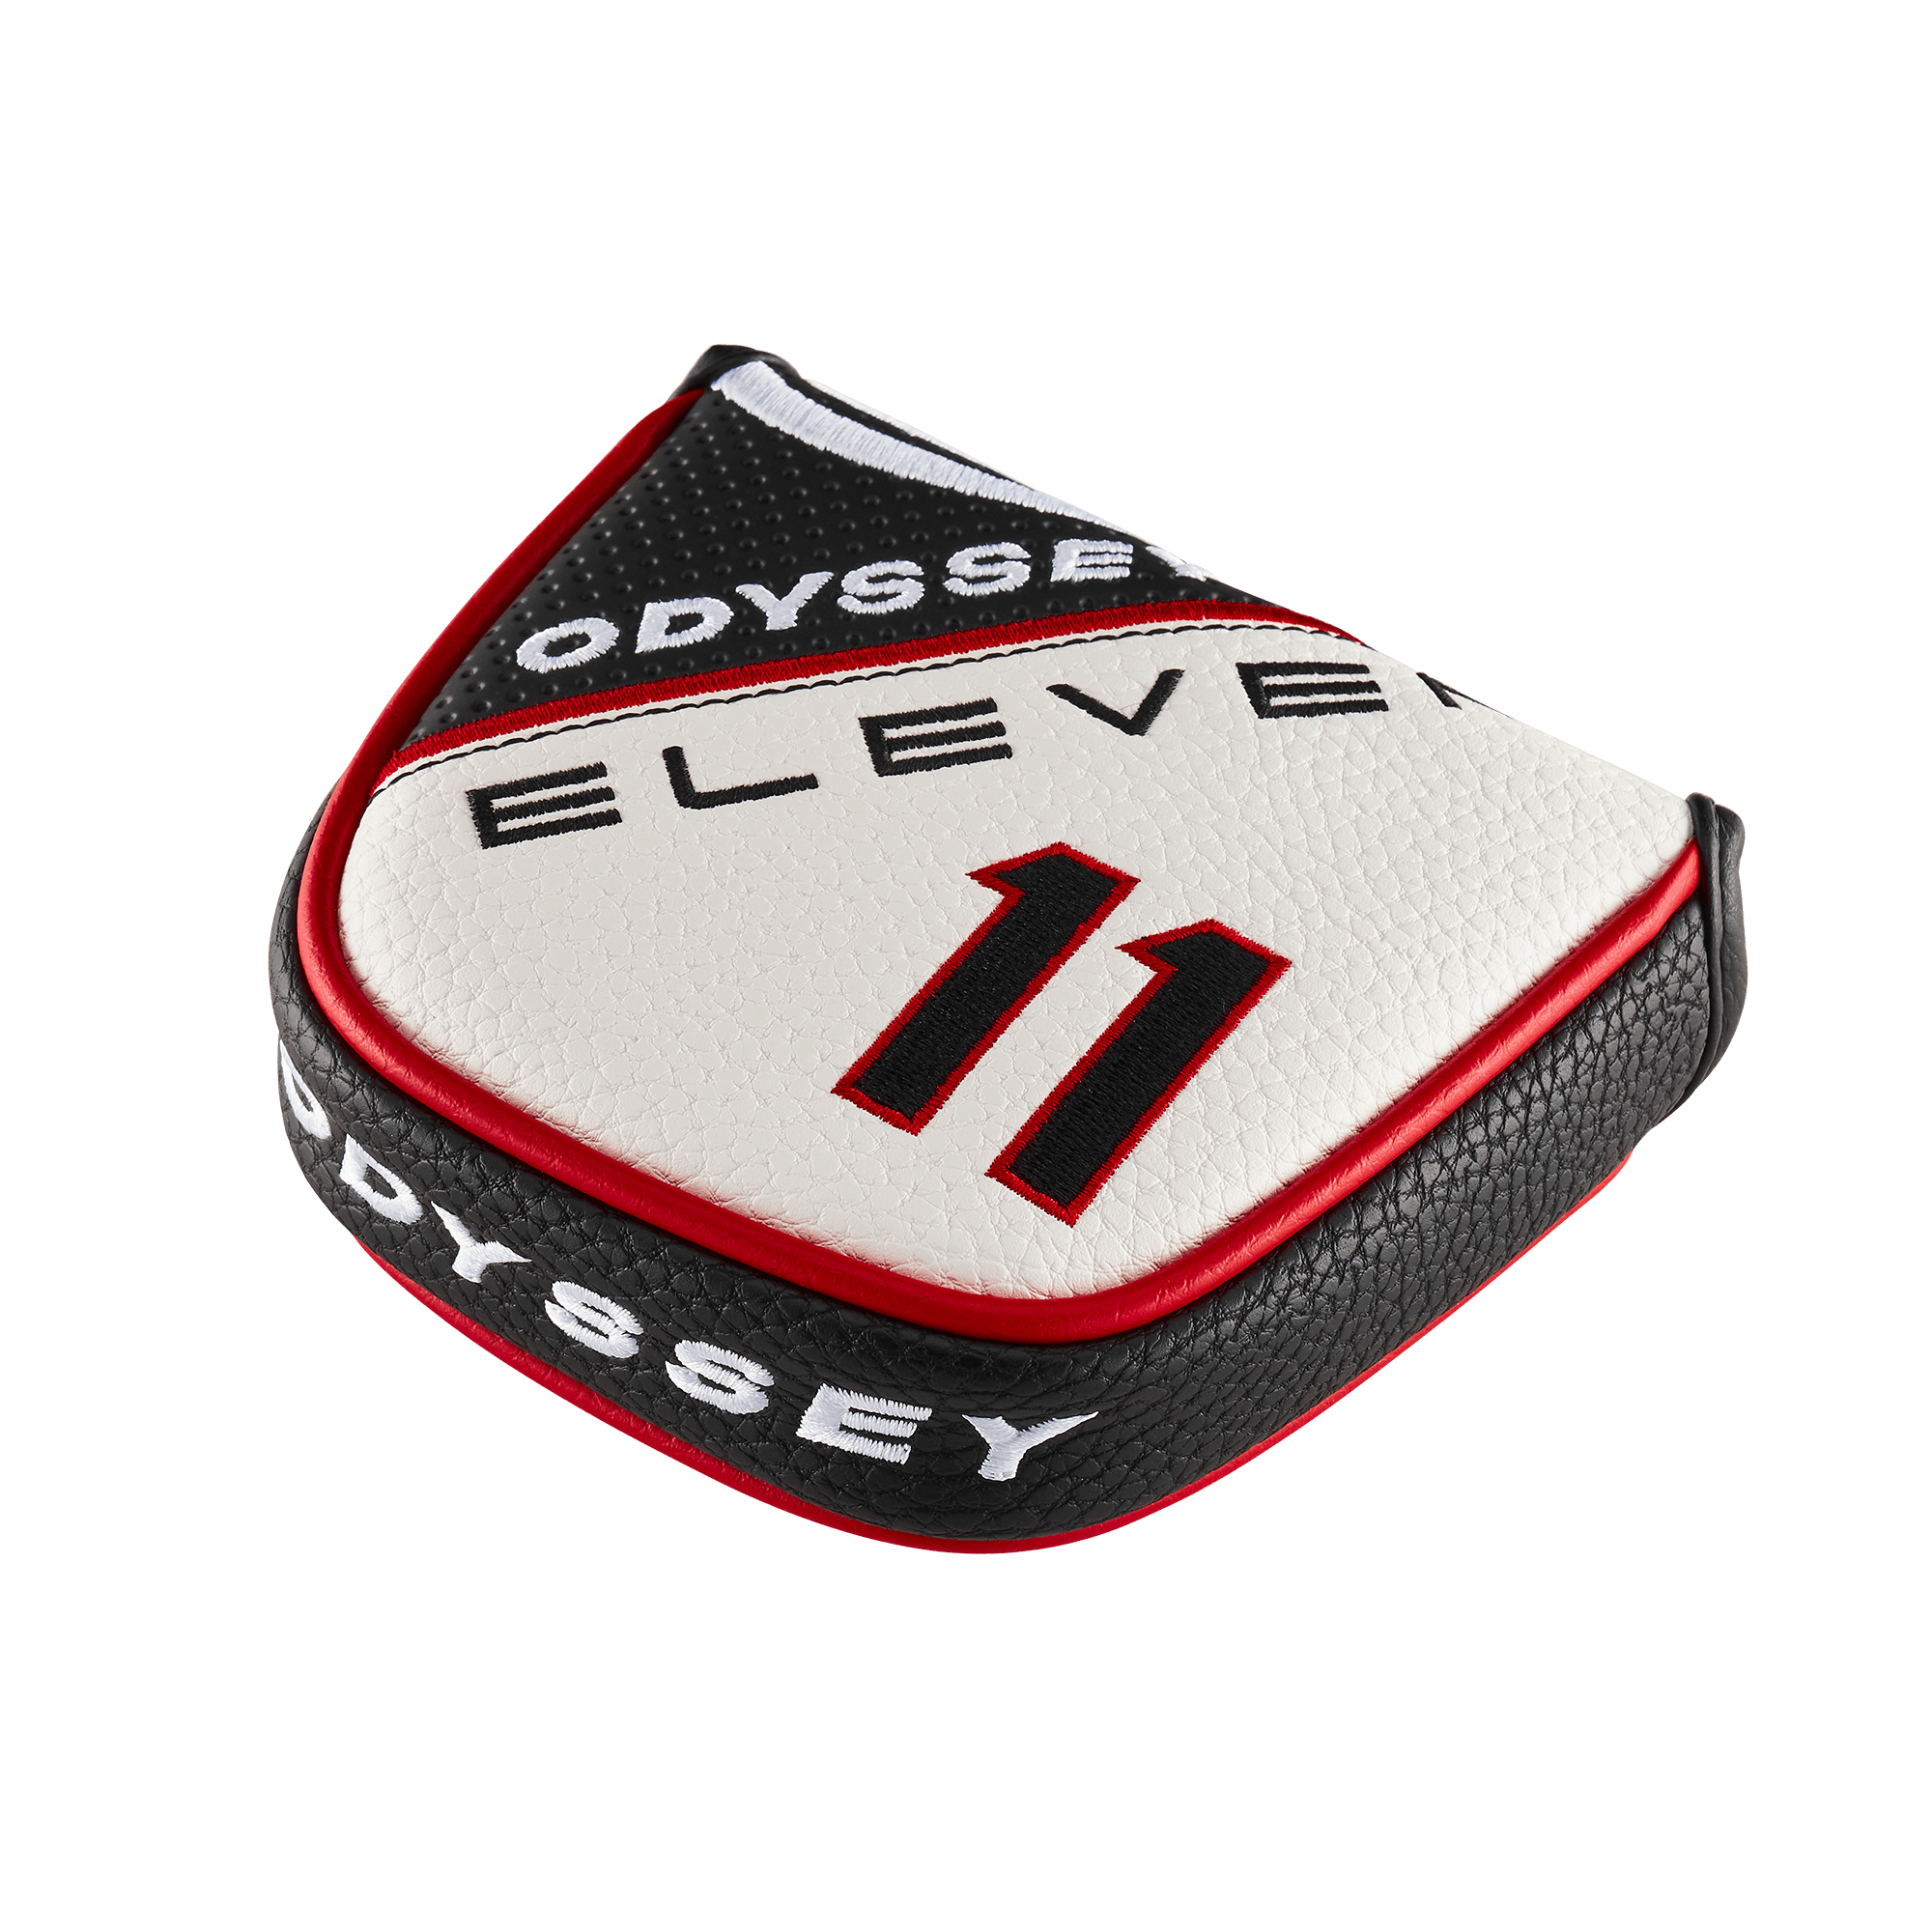 Eleven S Putter | Odyssey Golf | Specs